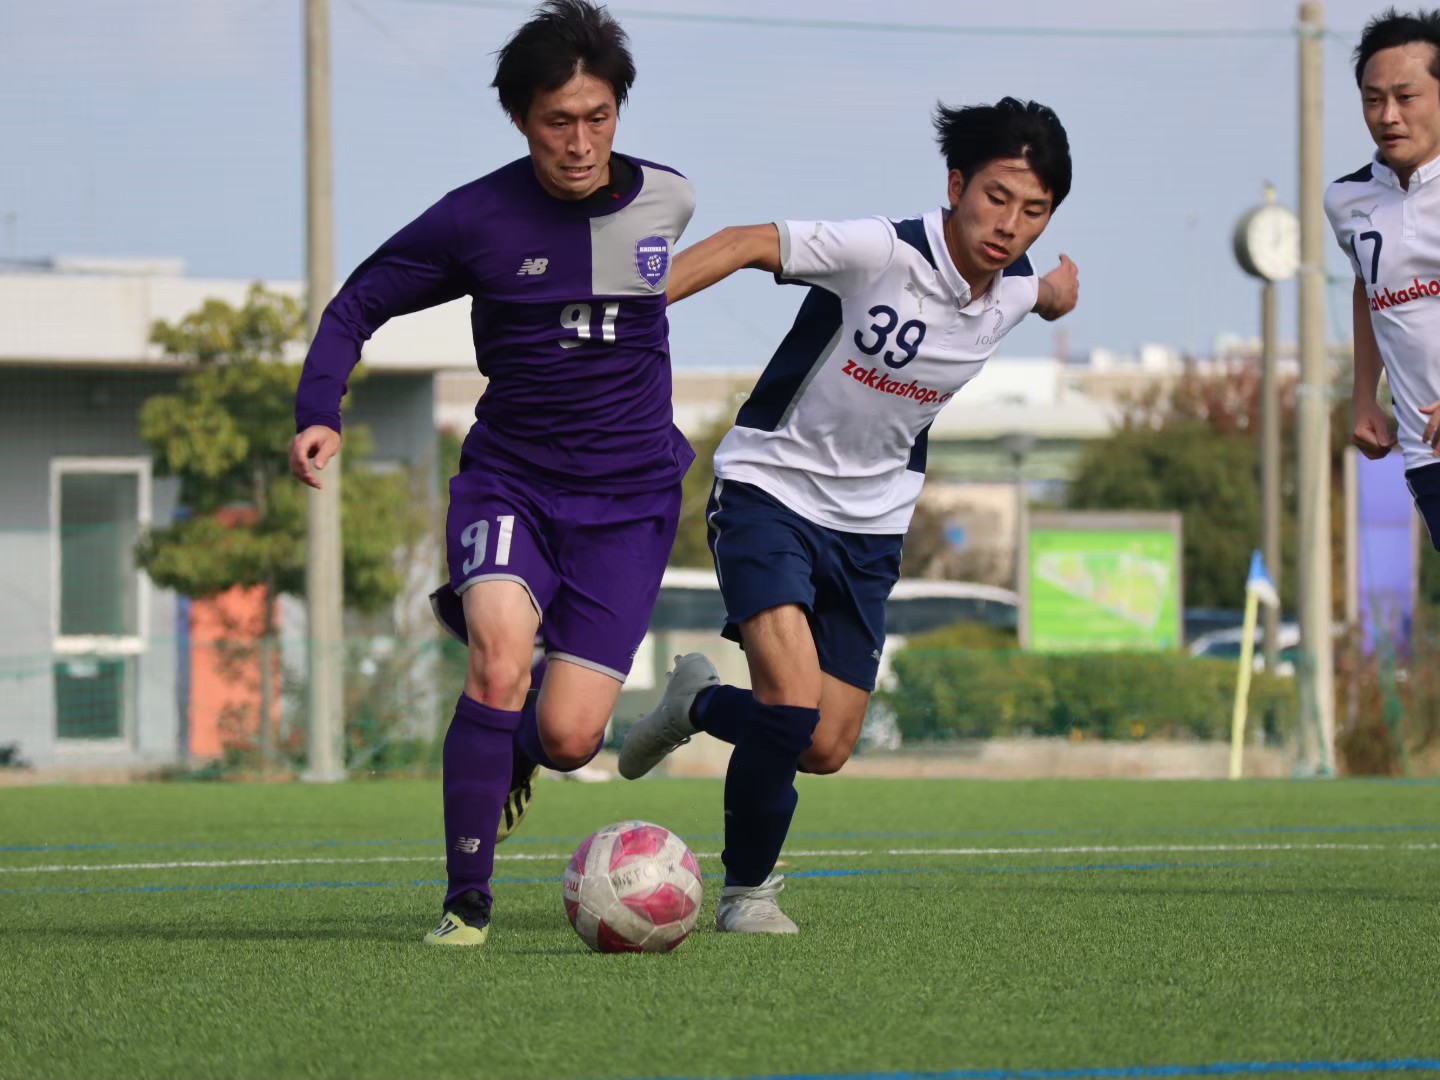 Kaizuka Fc Official 貝塚fc 公式 大阪府社会人サッカーリーグ1部に所属する社会人サッカーチームの公式サイトです